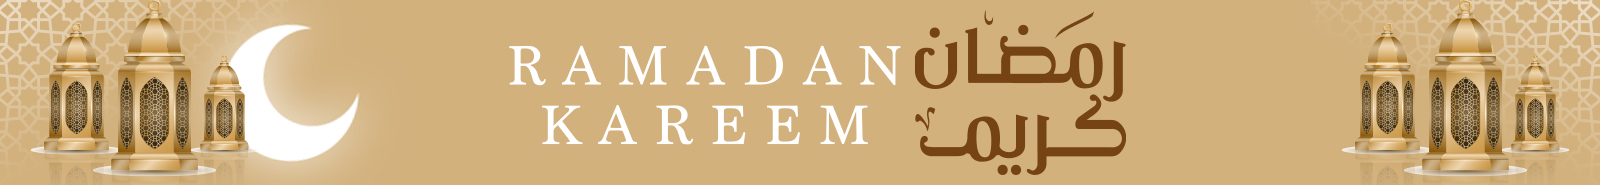 web-banner-ramadan